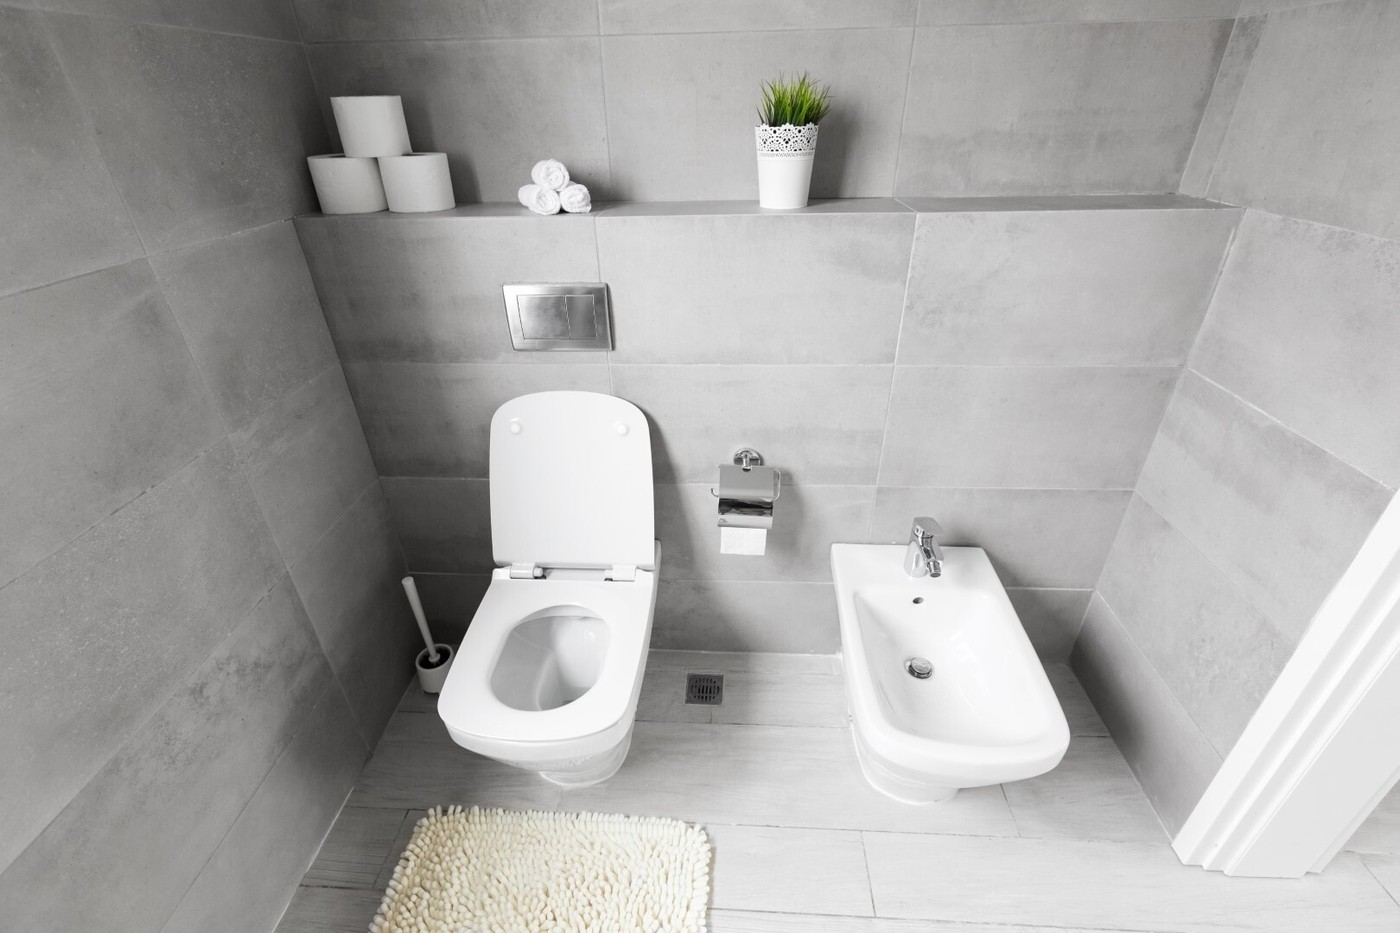 White ceramic bidet and toilet